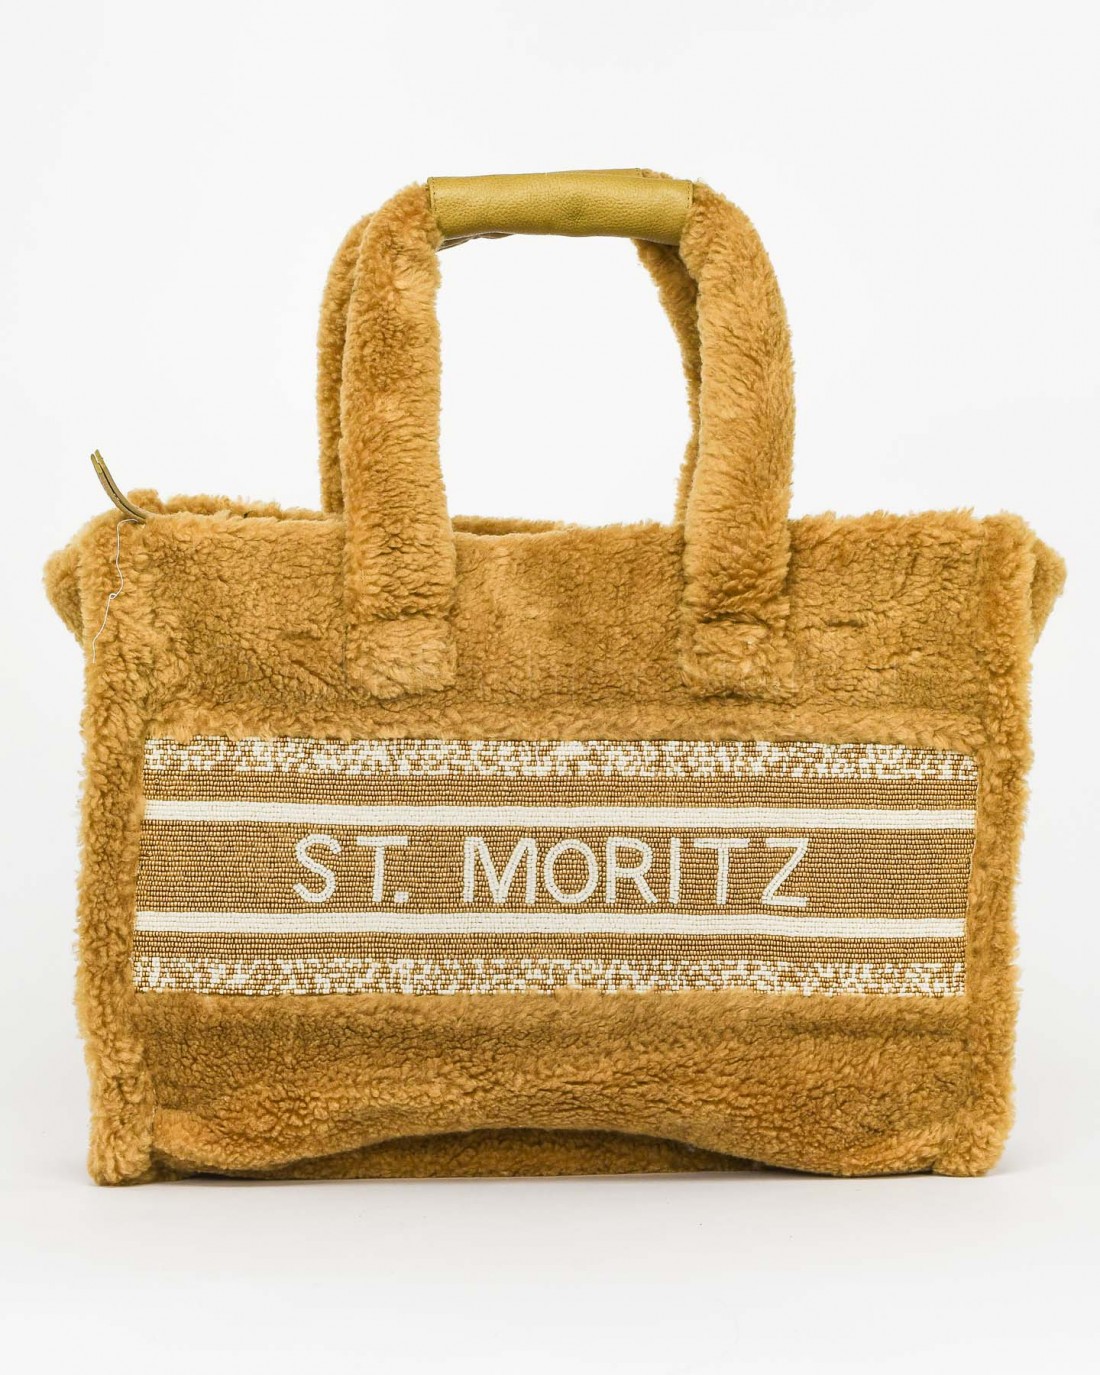 De Siena Borsa Maxi St Moritz Gold Blondie  1003 ST MORITZ